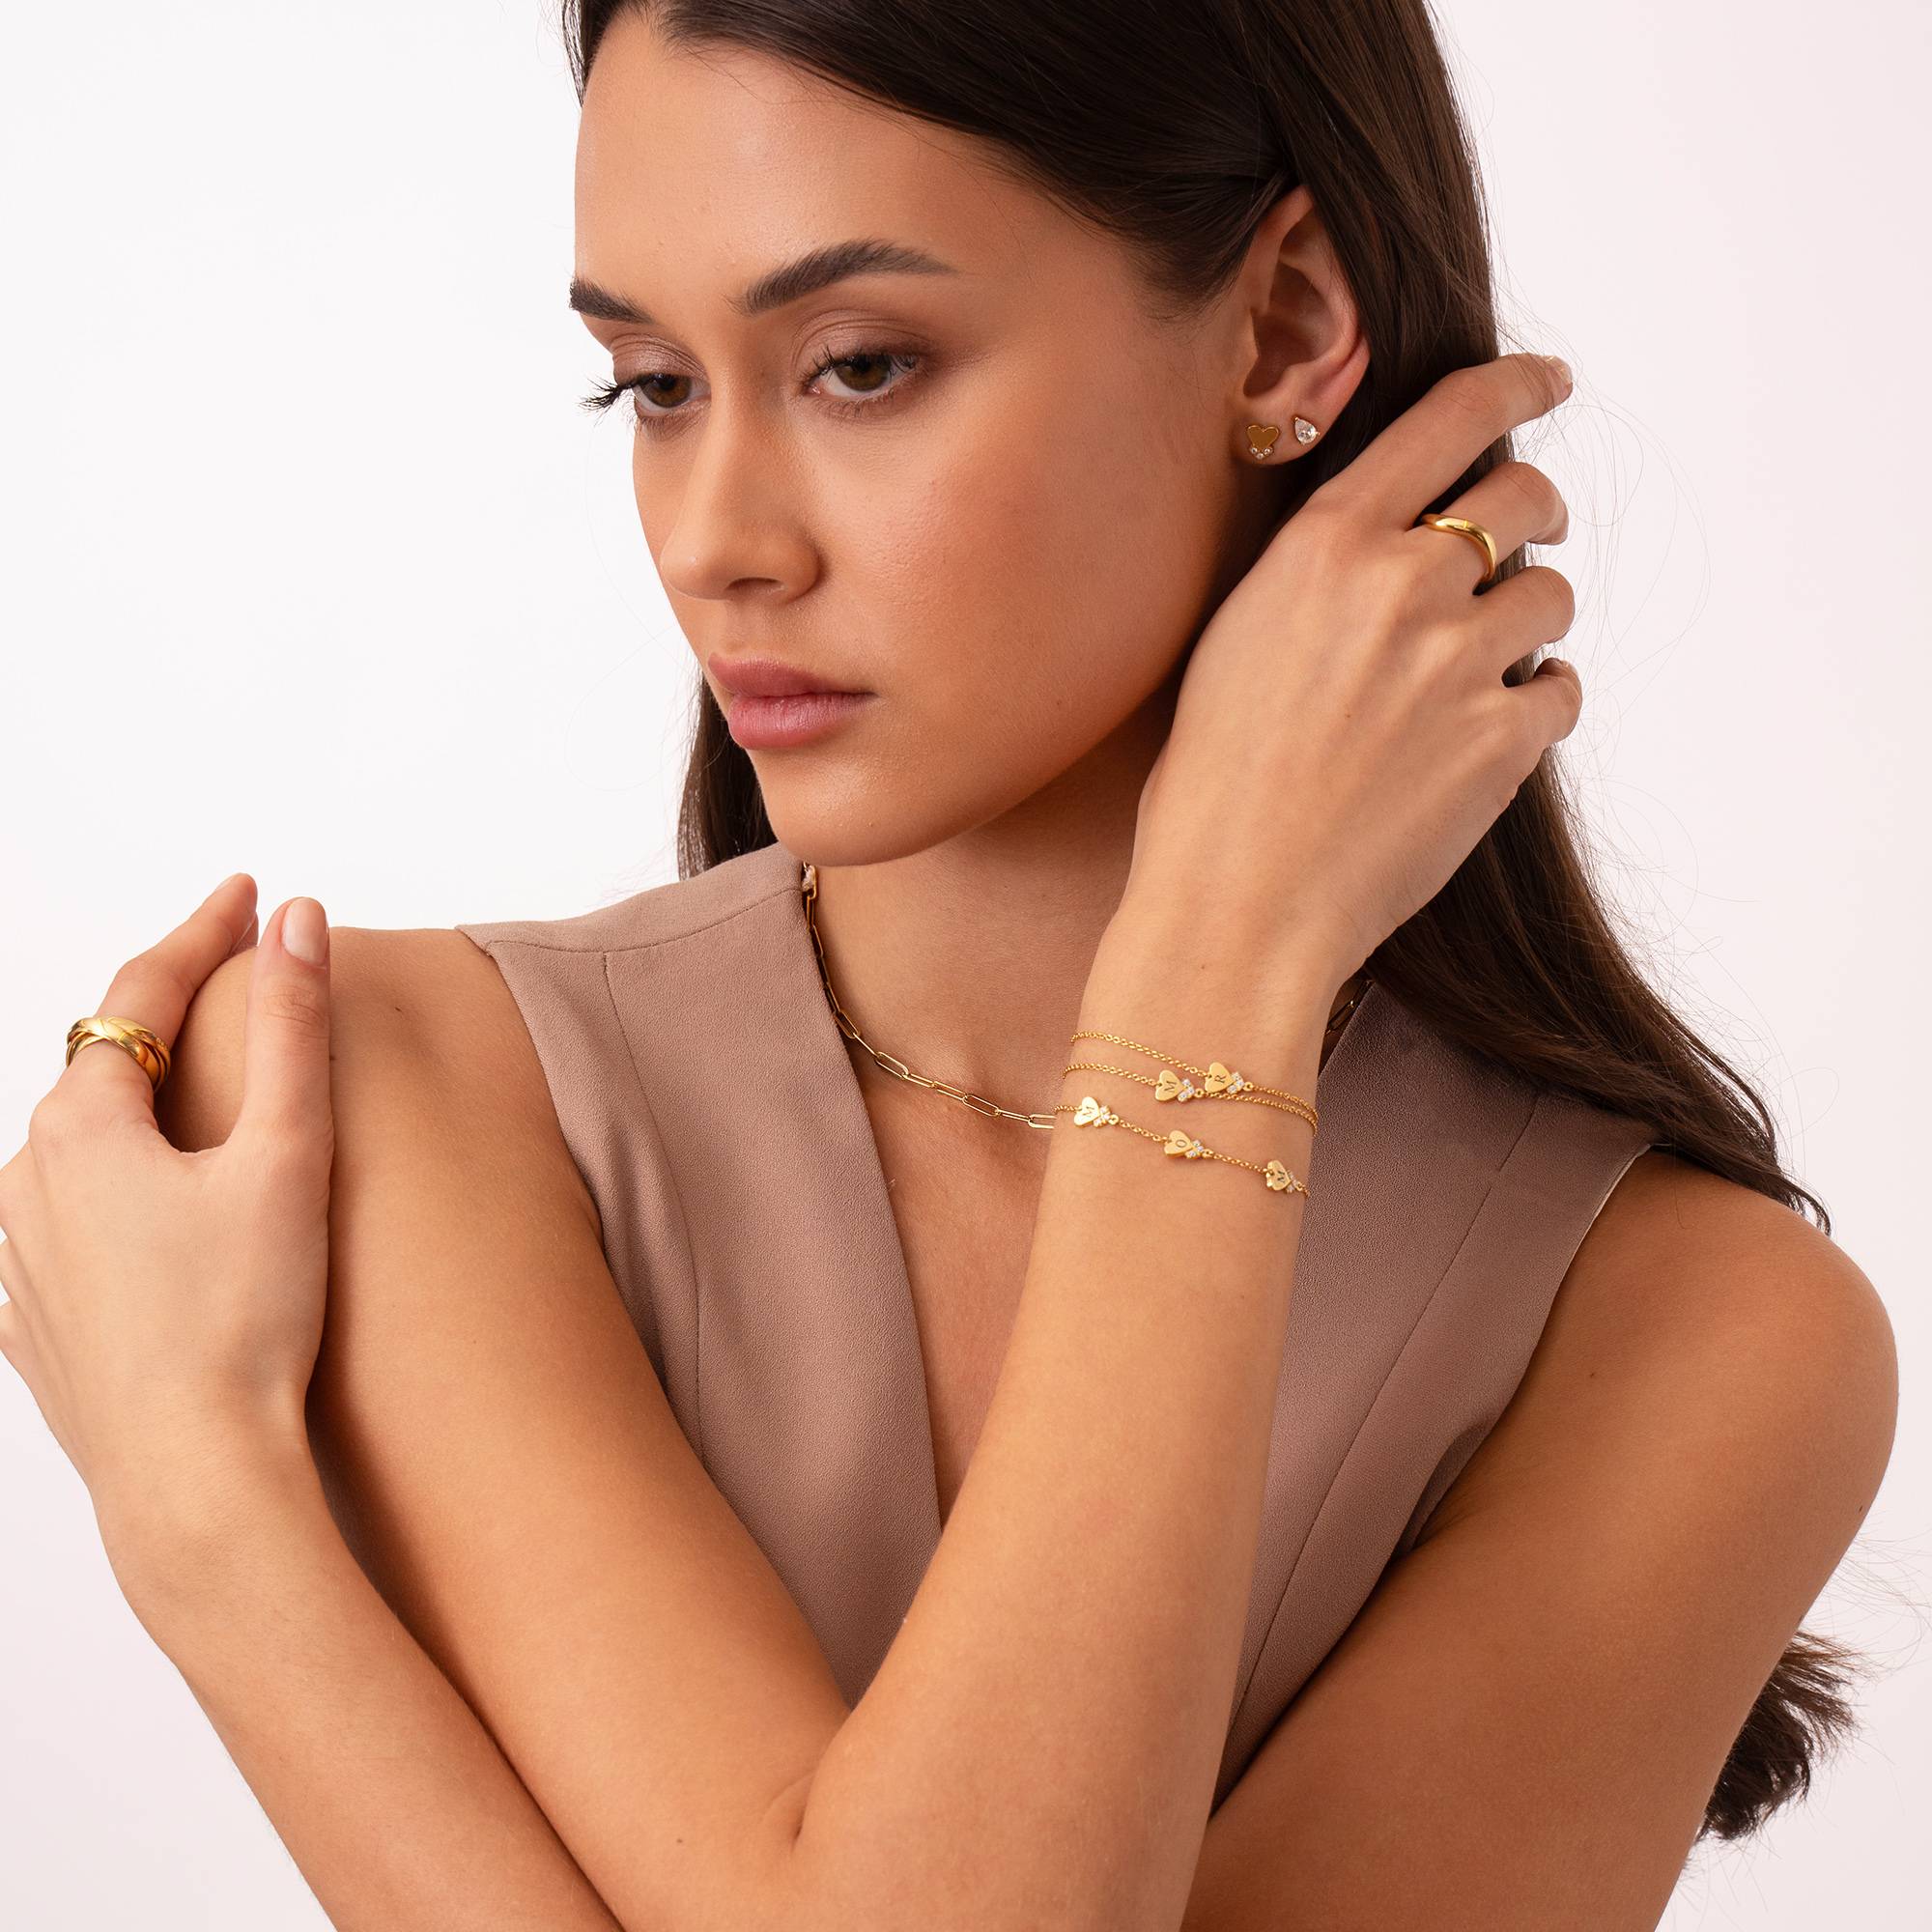 Dakota Heart Initial Bracelet with Diamonds in 18K Gold Vermeil-1 product photo